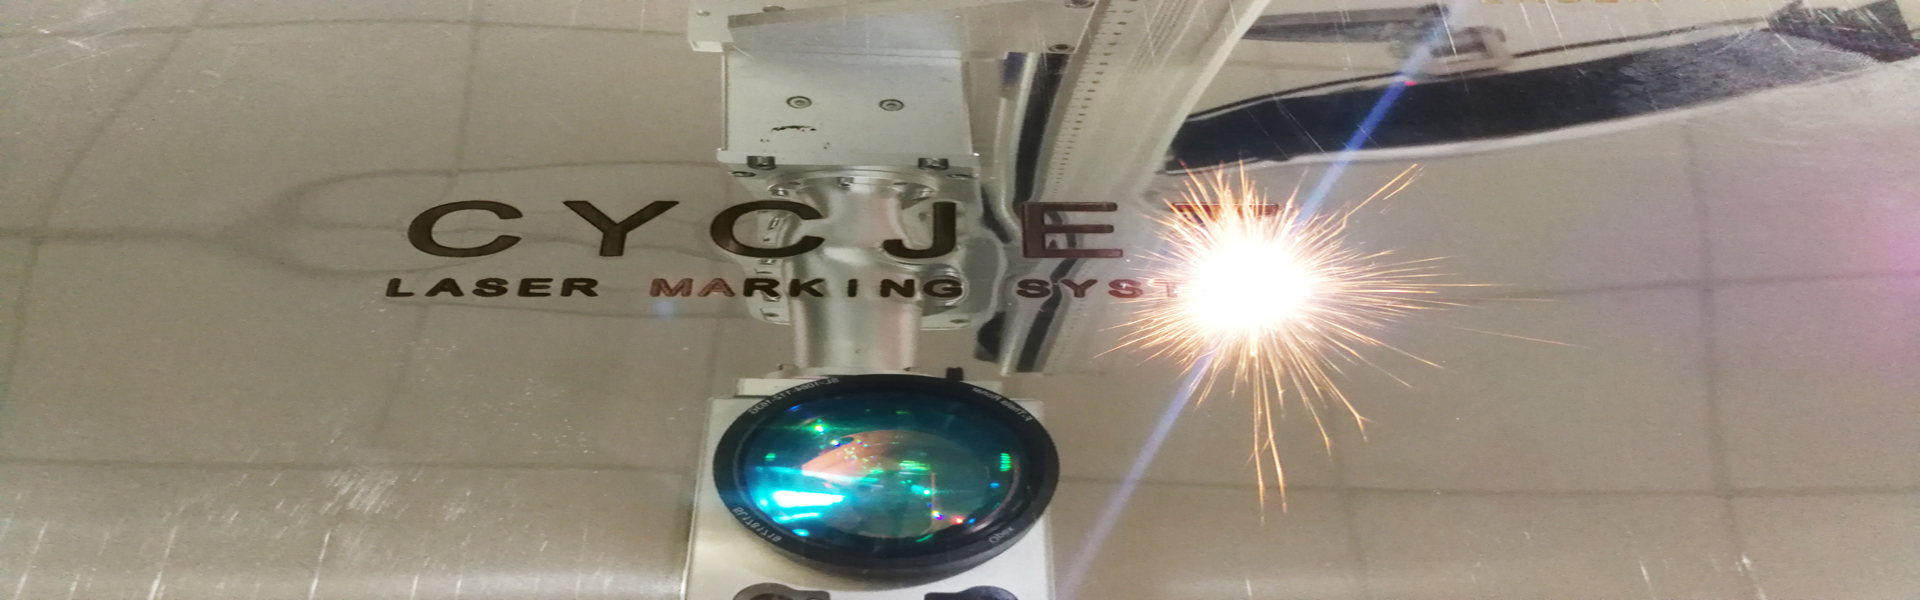 CYCJET Laser Marking Machine.jpg